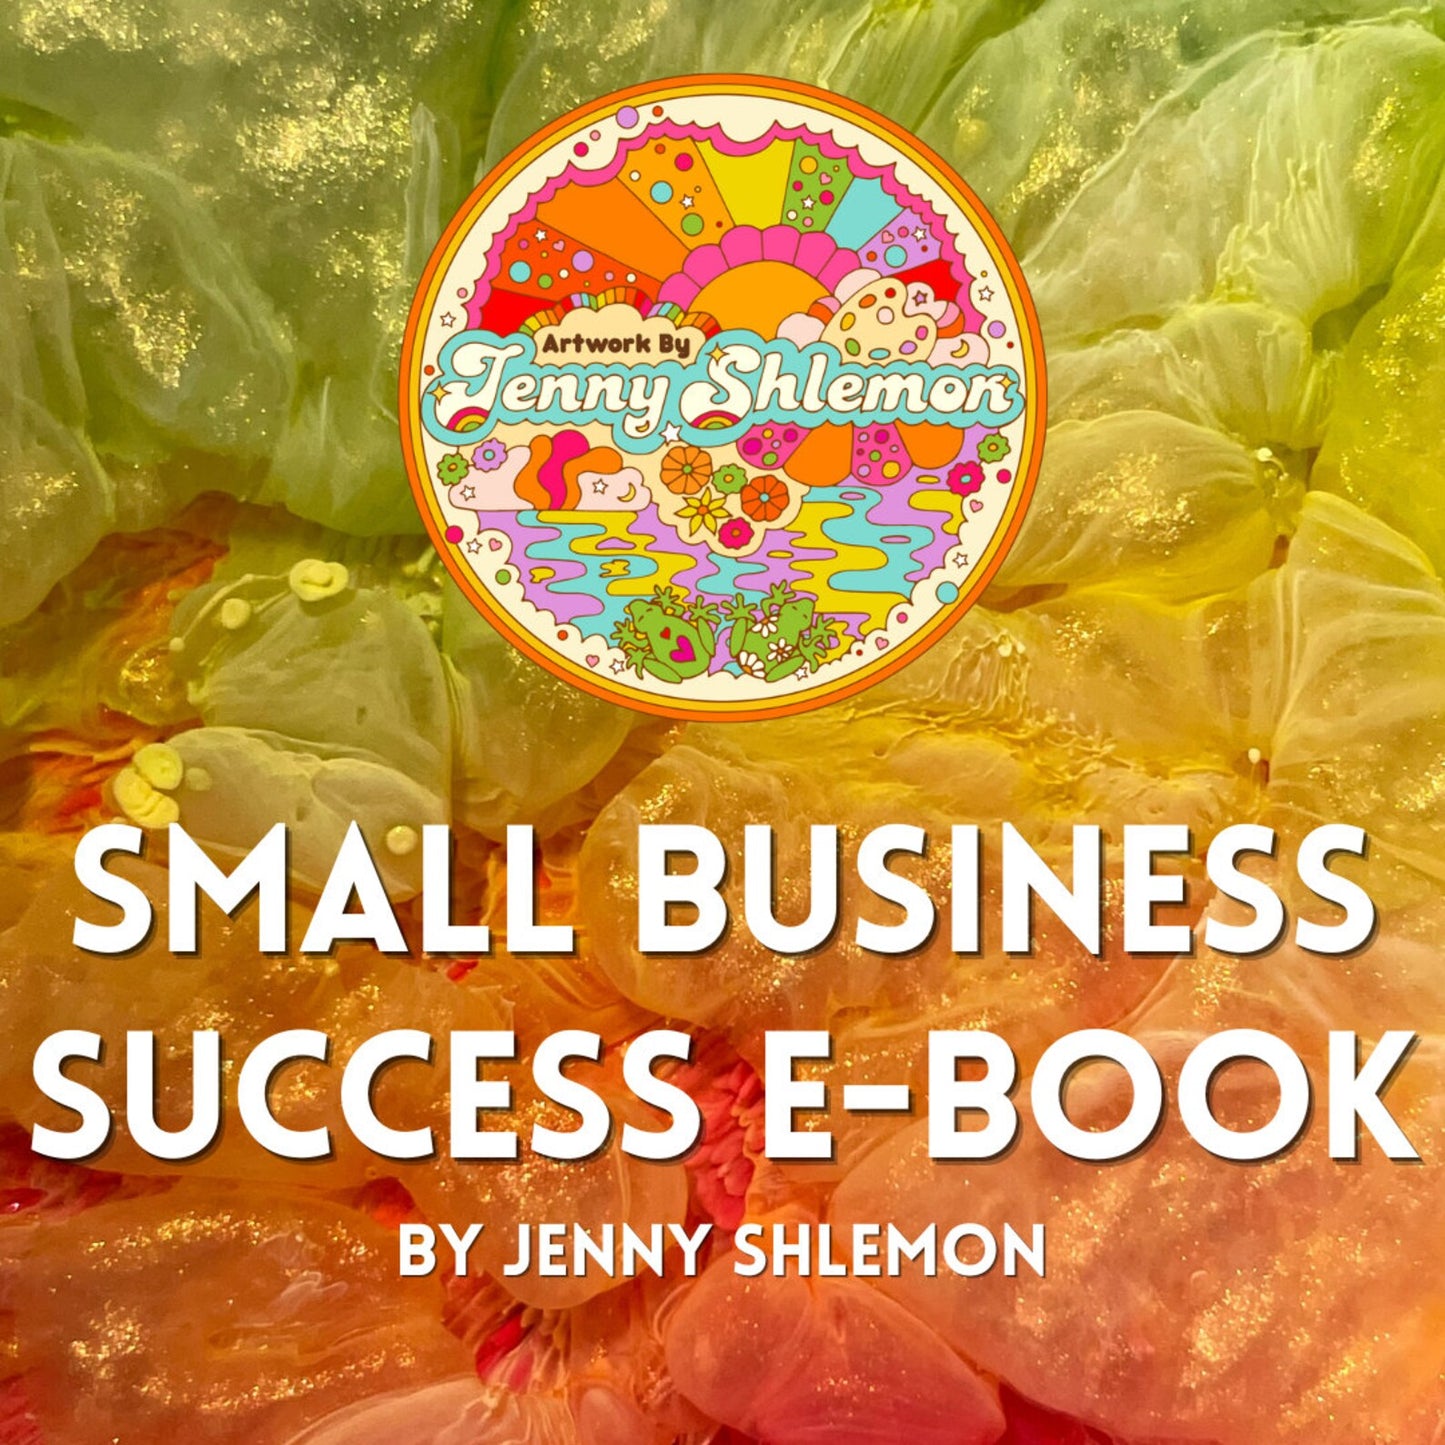 Small Business Success E-Book